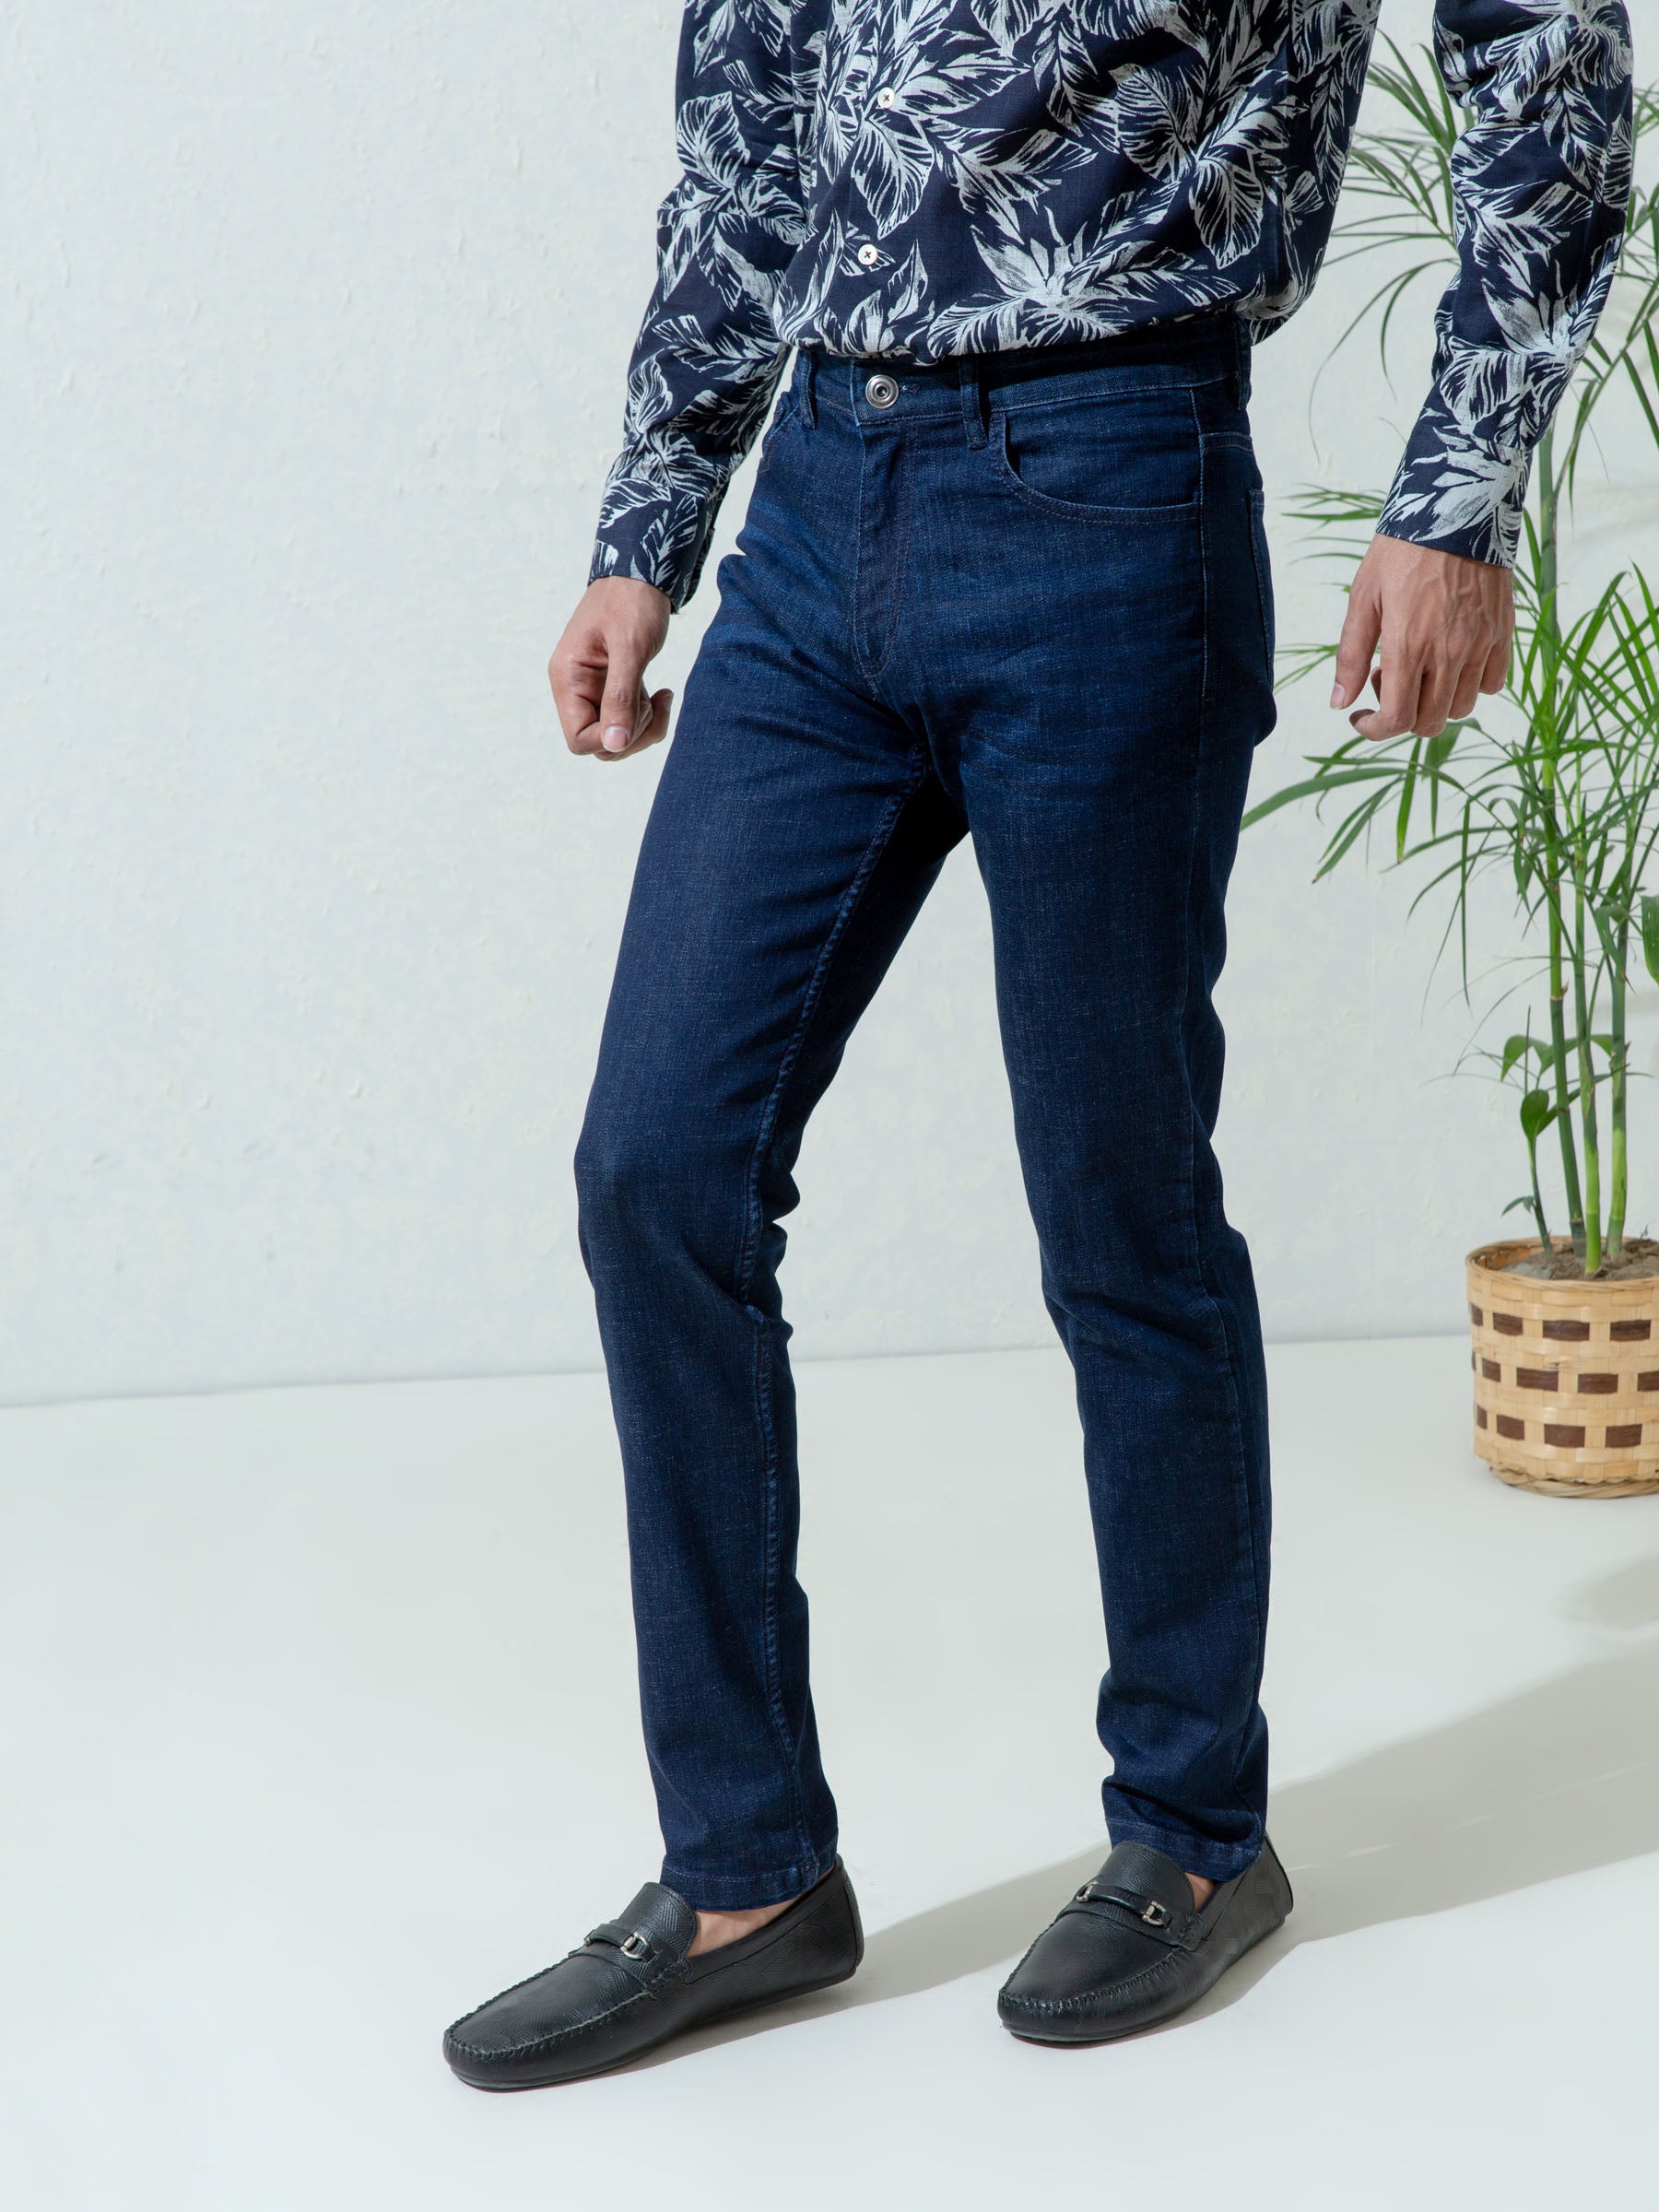 Buy Dark Blue Ankle Length Original Stretch Jeans Online at Muftijeans